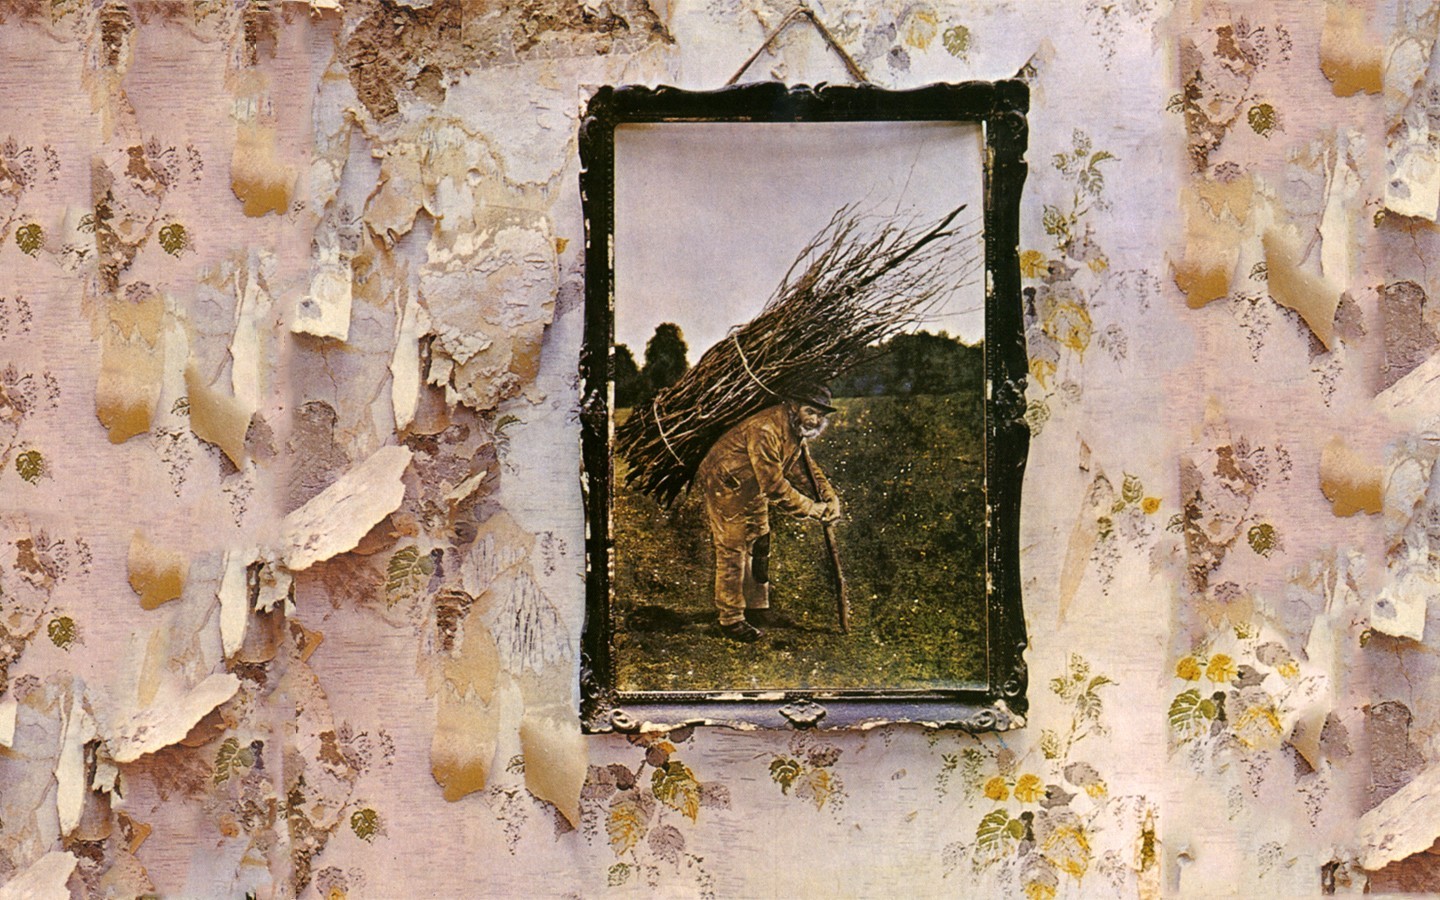 General 1440x900 music album covers Led Zeppelin beige